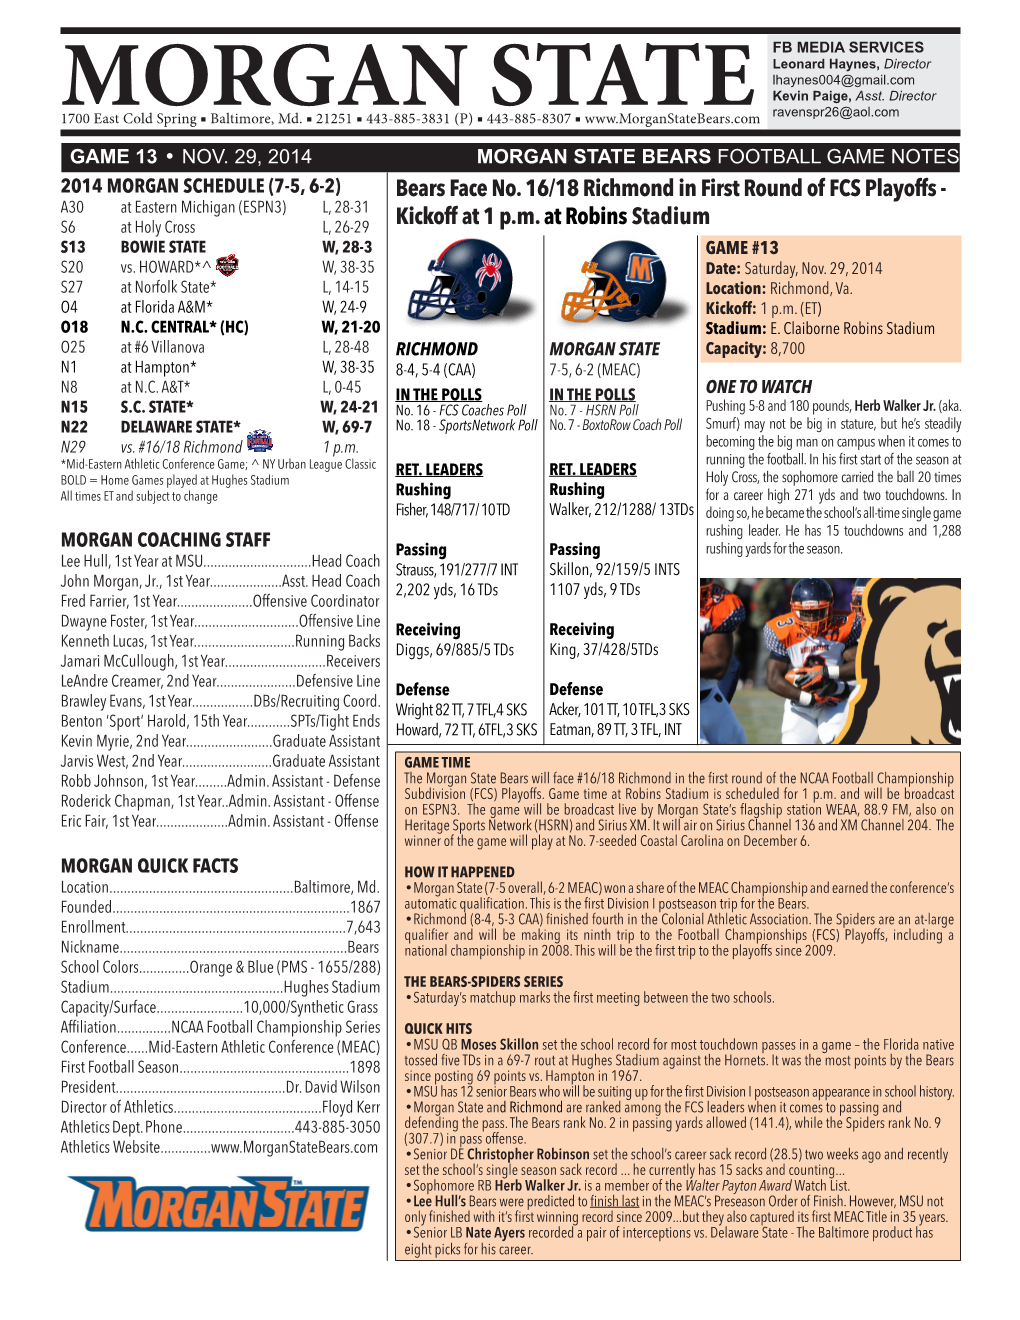 MORGAN STATE BEARS FOOTBALL GAME NOTES 2014 MORGAN SCHEDULE (7-5, 6-2) Bears Face No